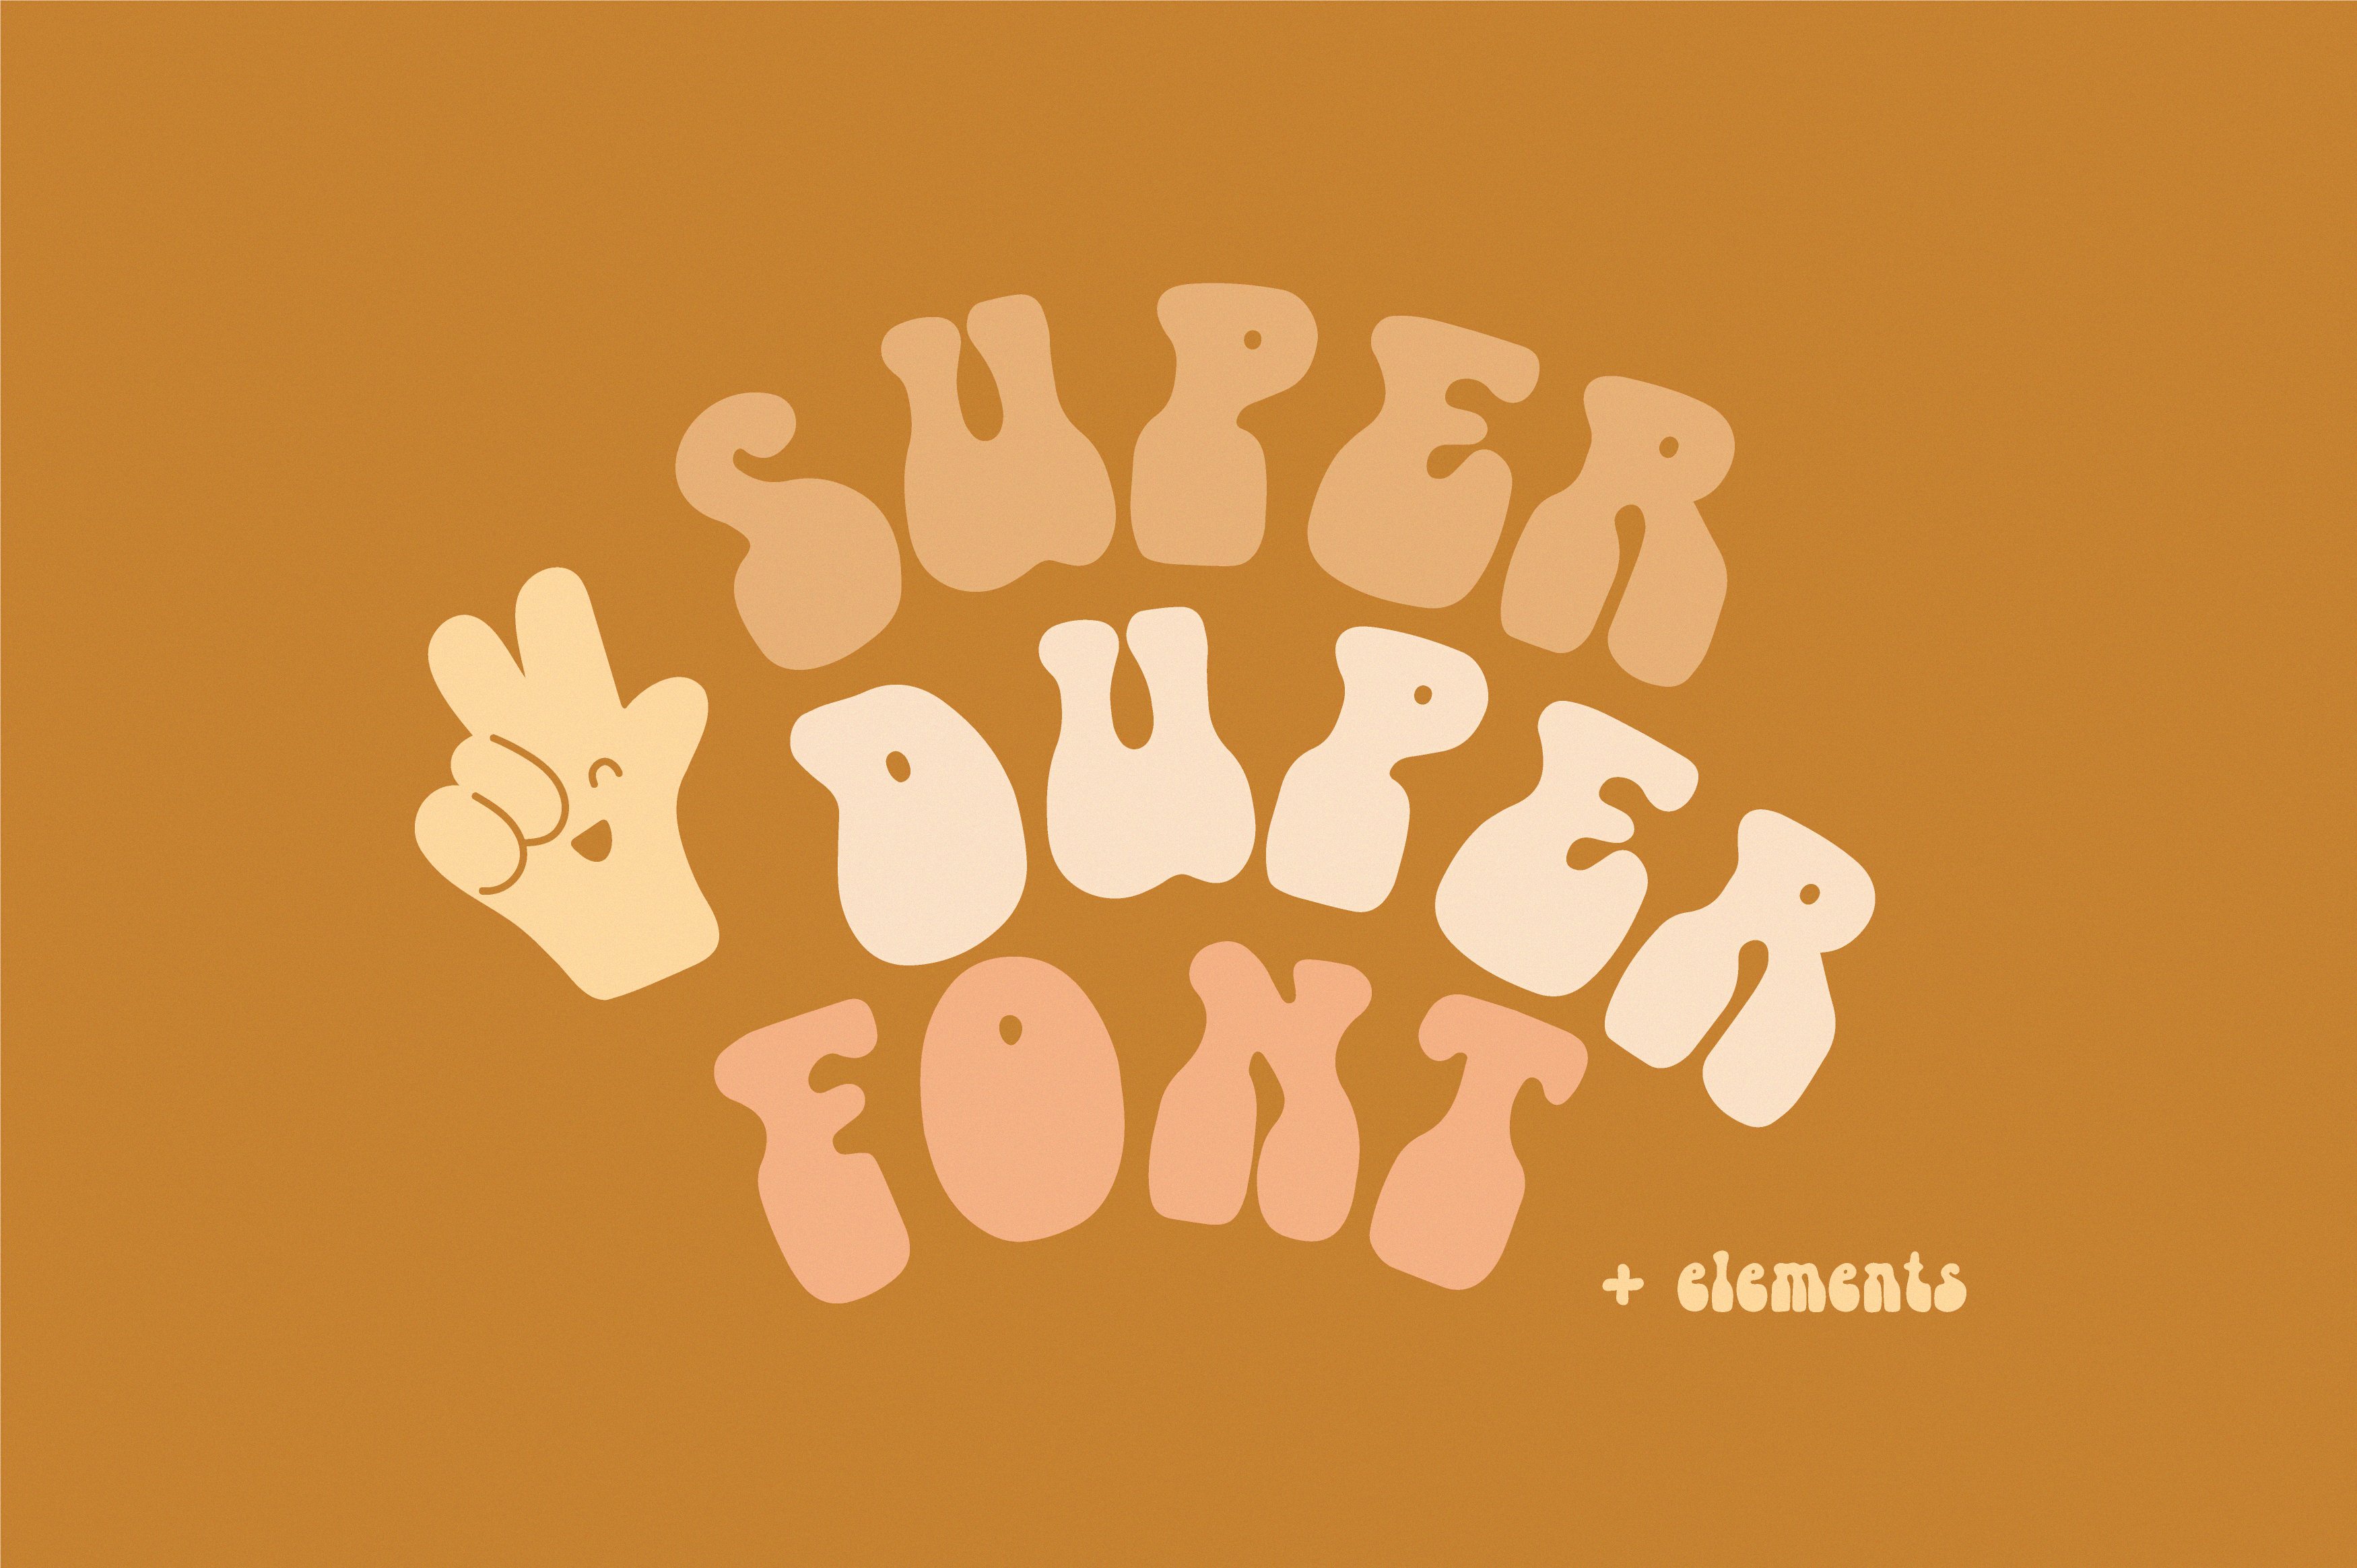 Super Duper | Handwritten font cover image.